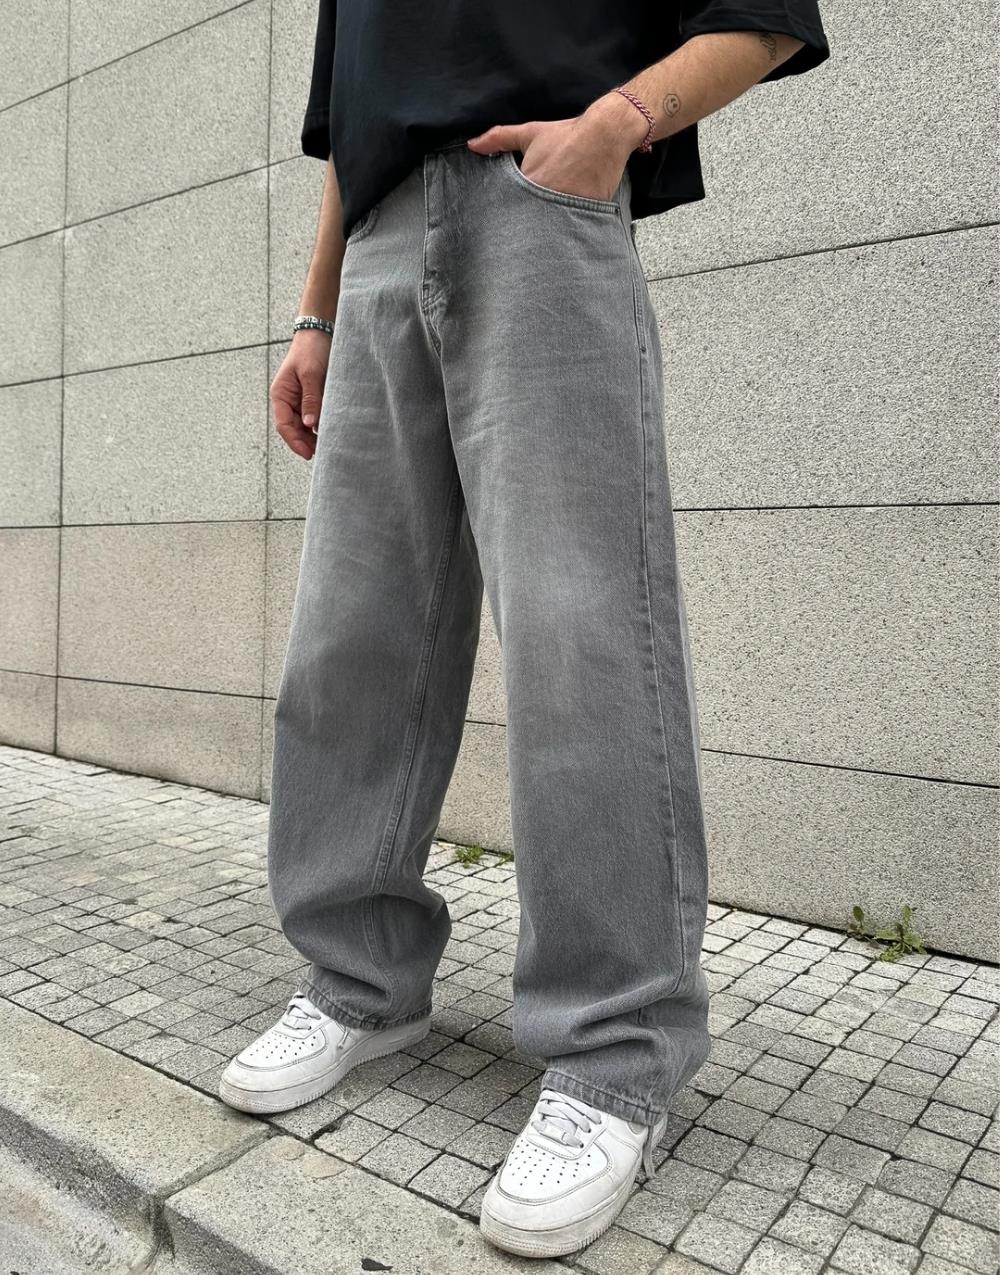 Premium Baggy Men's Jeans Pants Black Smoked - STREETMODE ™